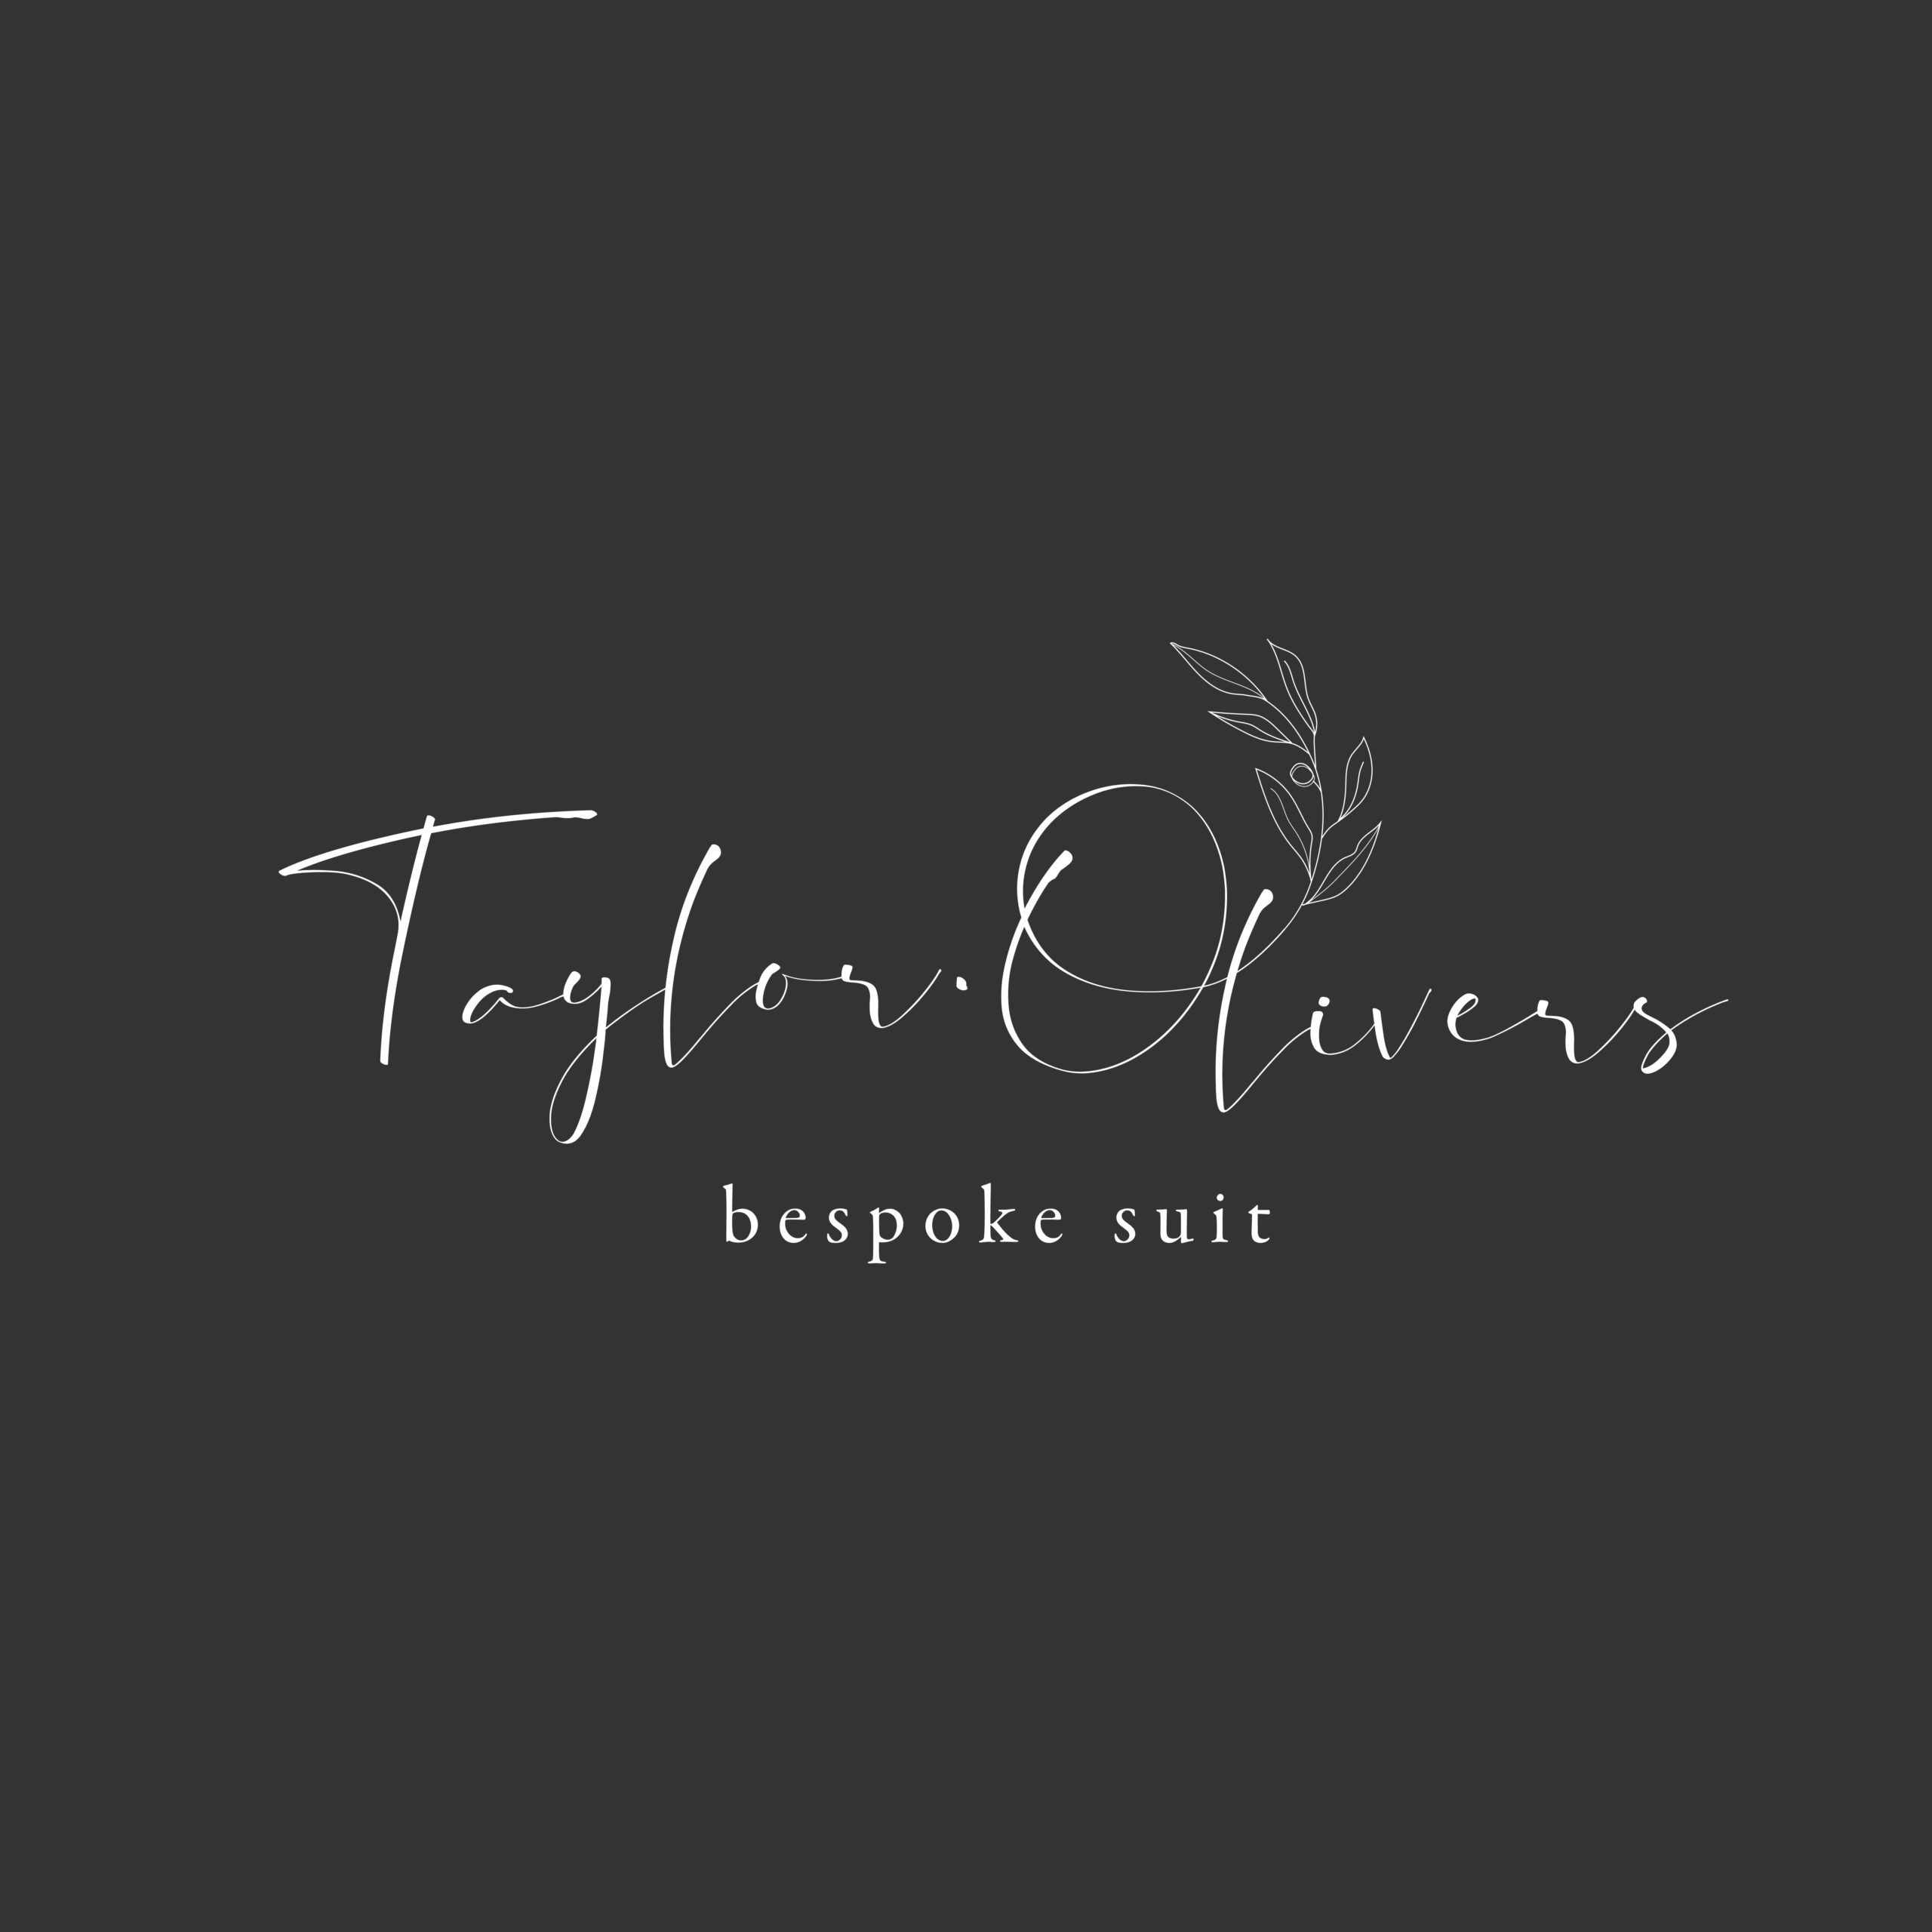 taylorolivers_logo